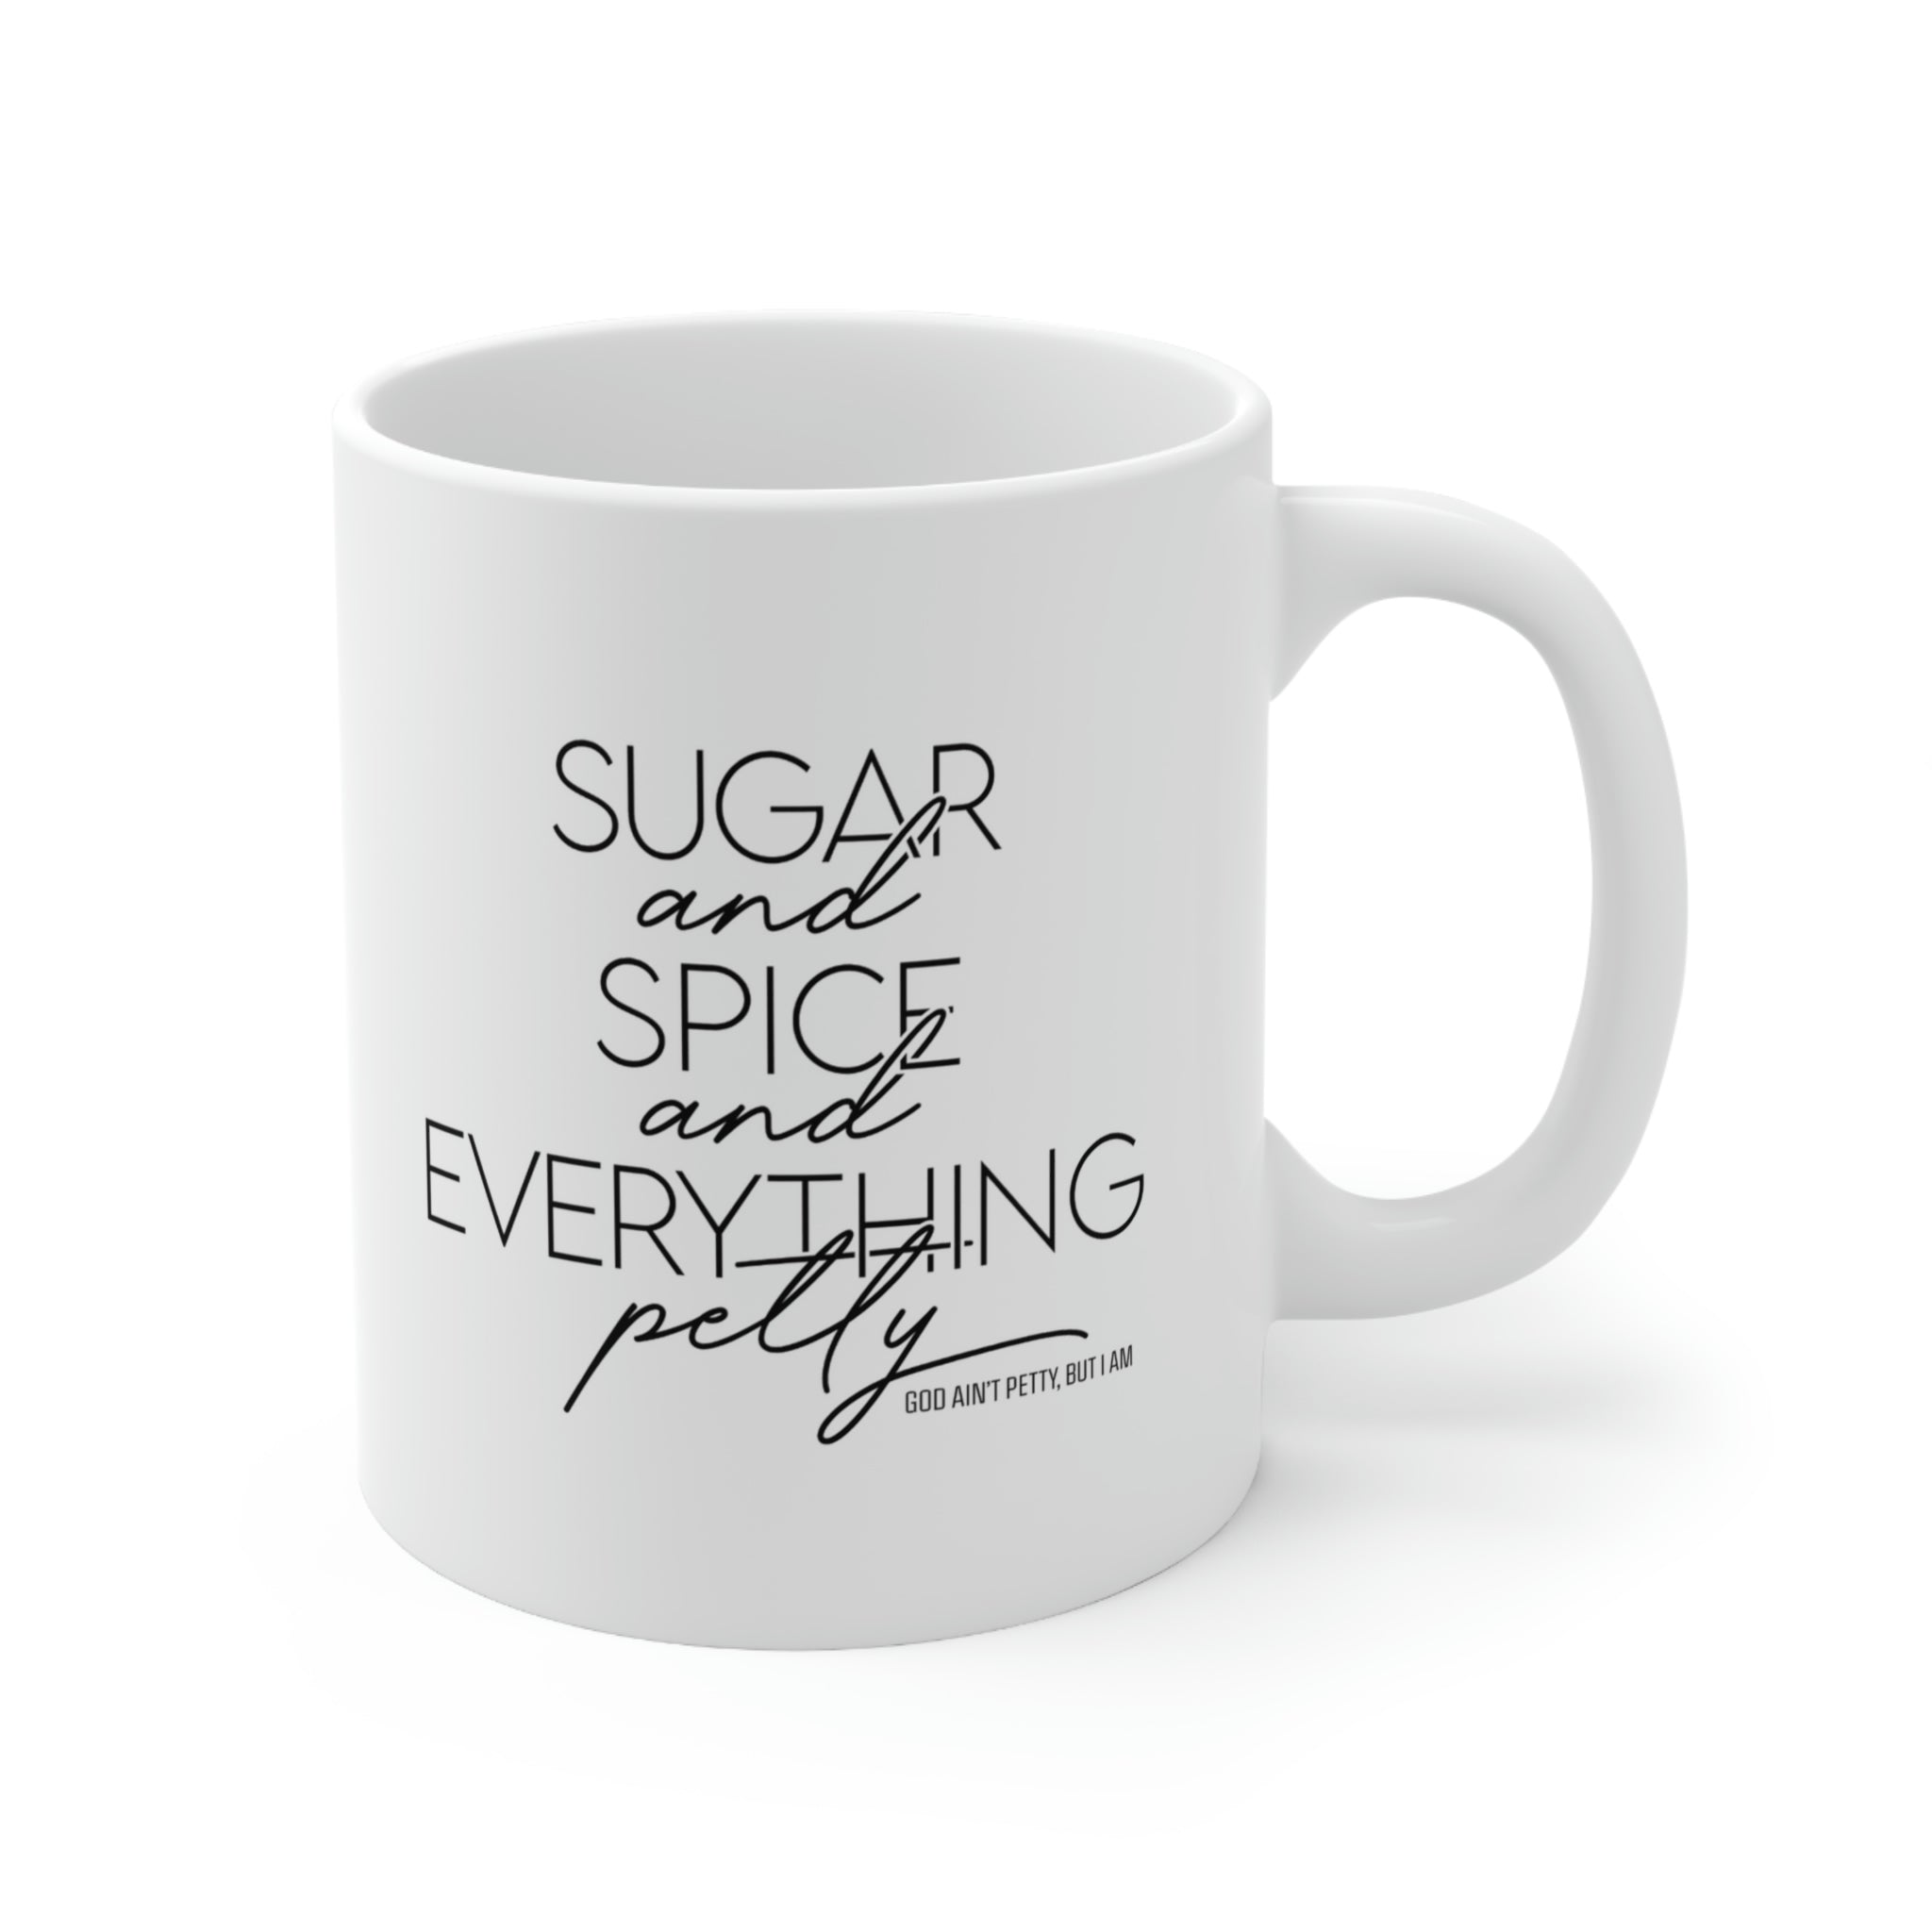 Sugar and Spice and everything petty Mug 11oz (White/Black)-Mug-The Original God Ain't Petty But I Am